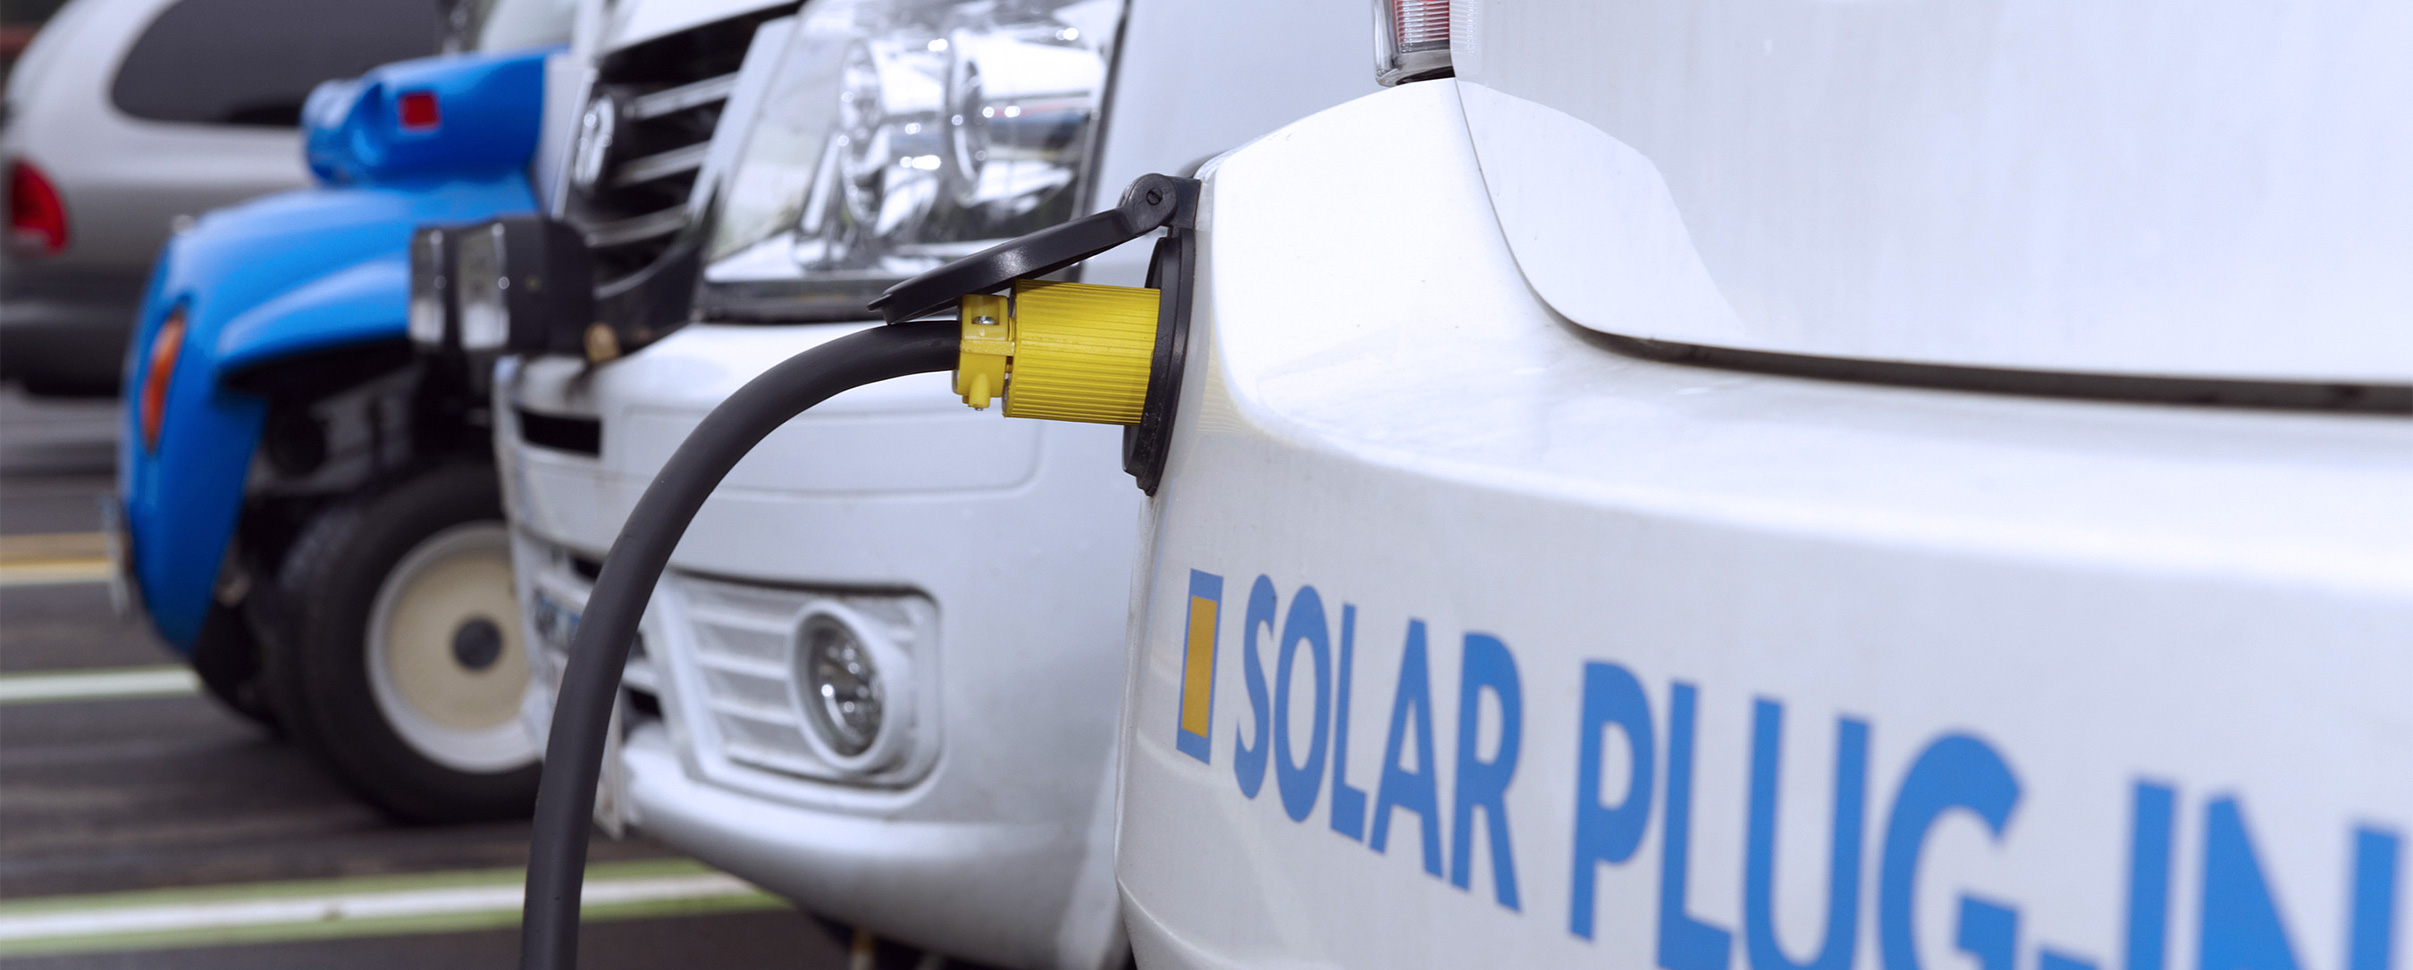 Solar power cars recharging